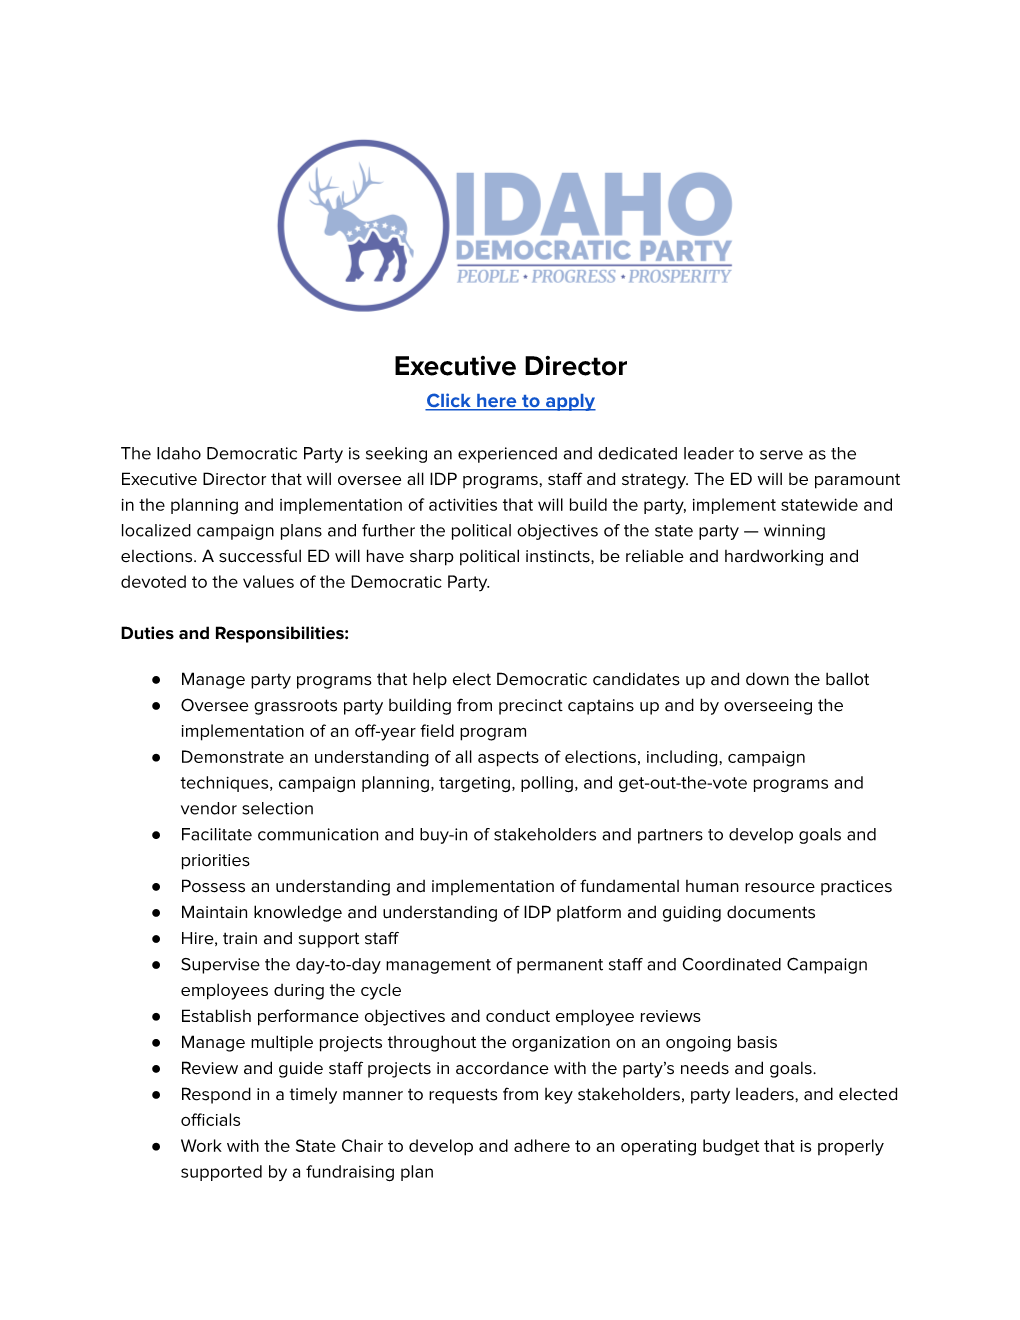 IDP Executive Director Job Description